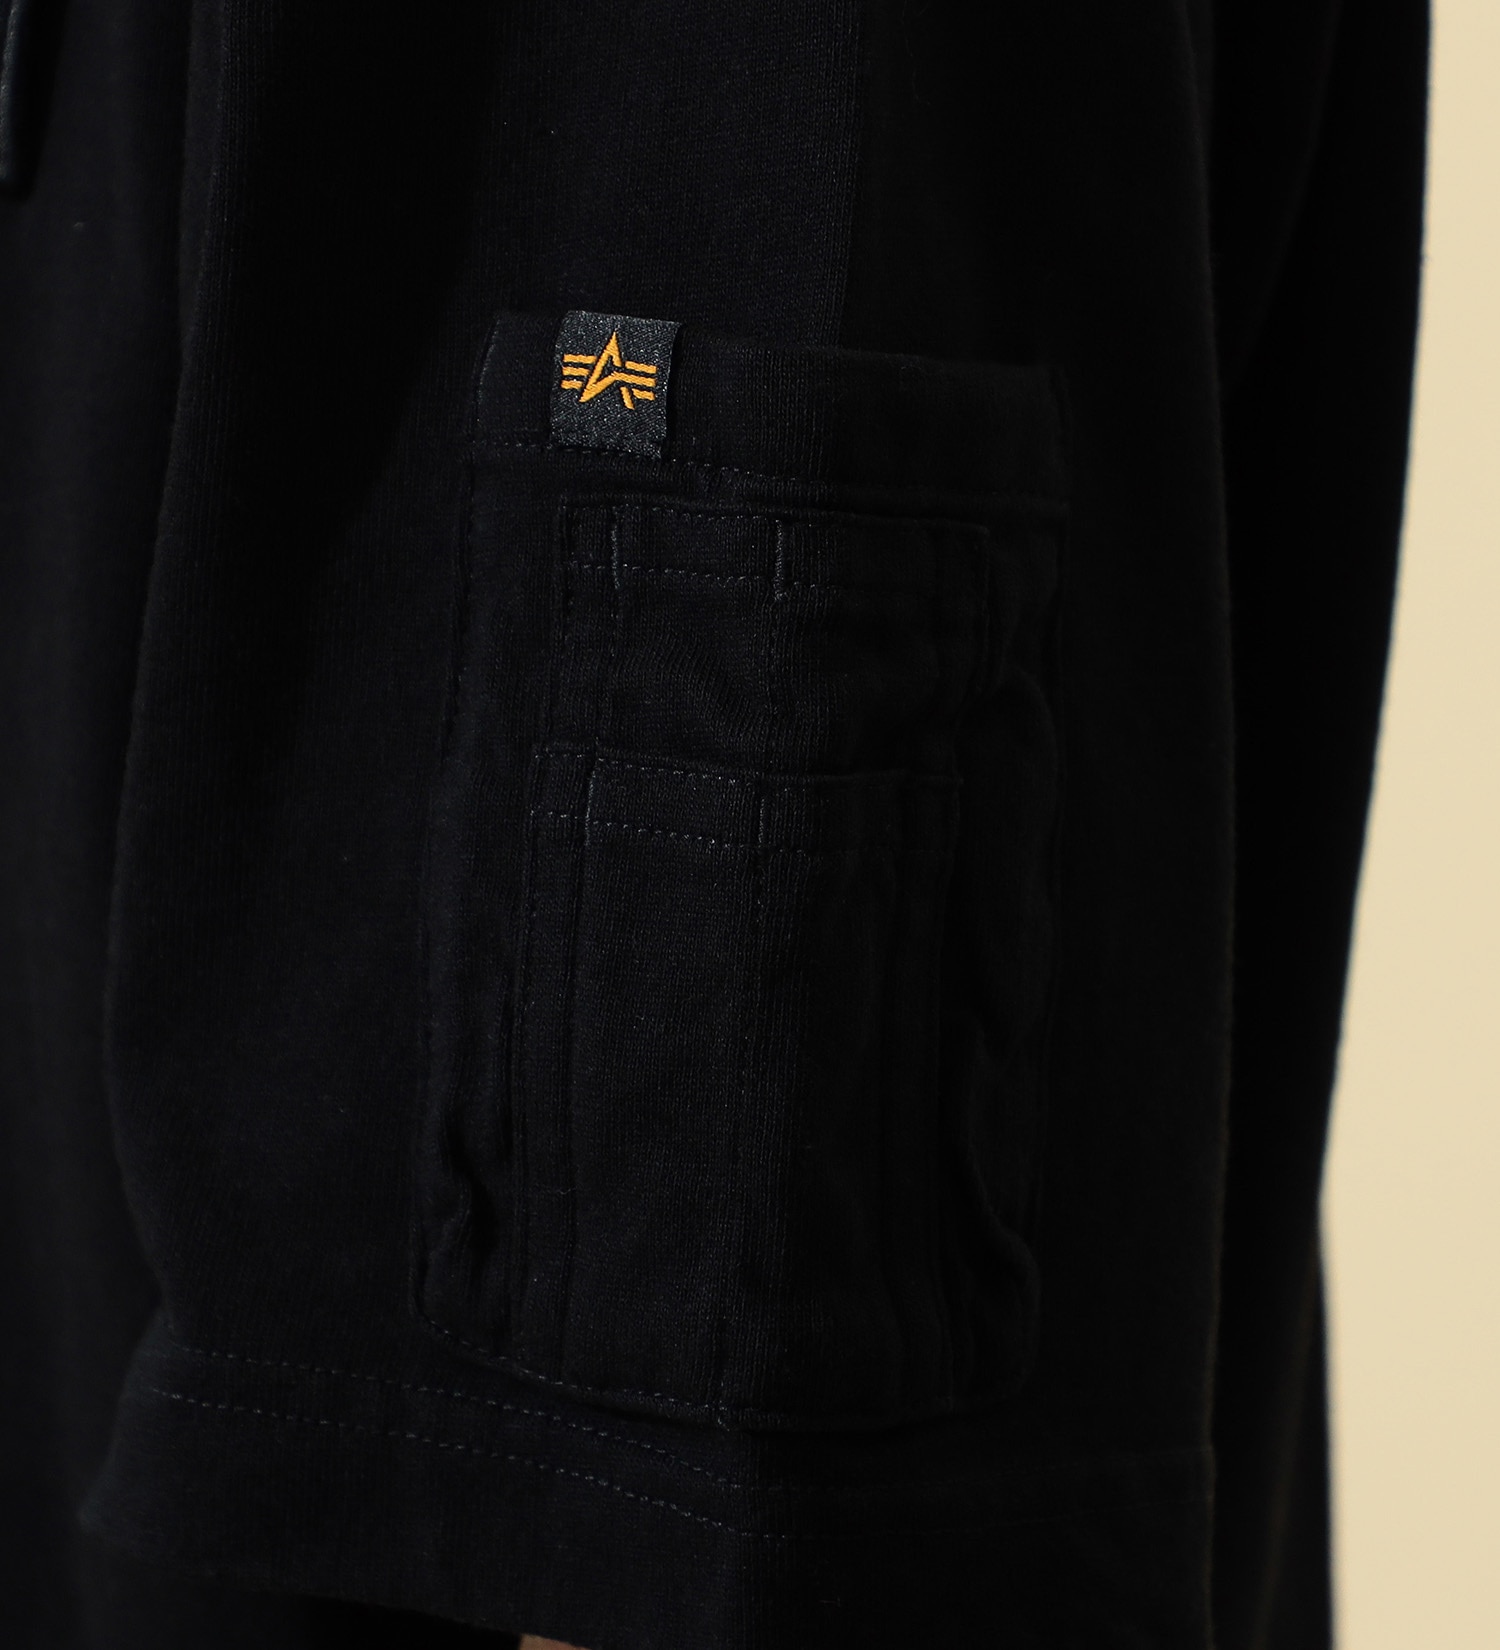 ALPHA(アルファ)のスクアドロンプリントパッチTシャツ 半袖|トップス/Tシャツ/カットソー/メンズ|ブラック